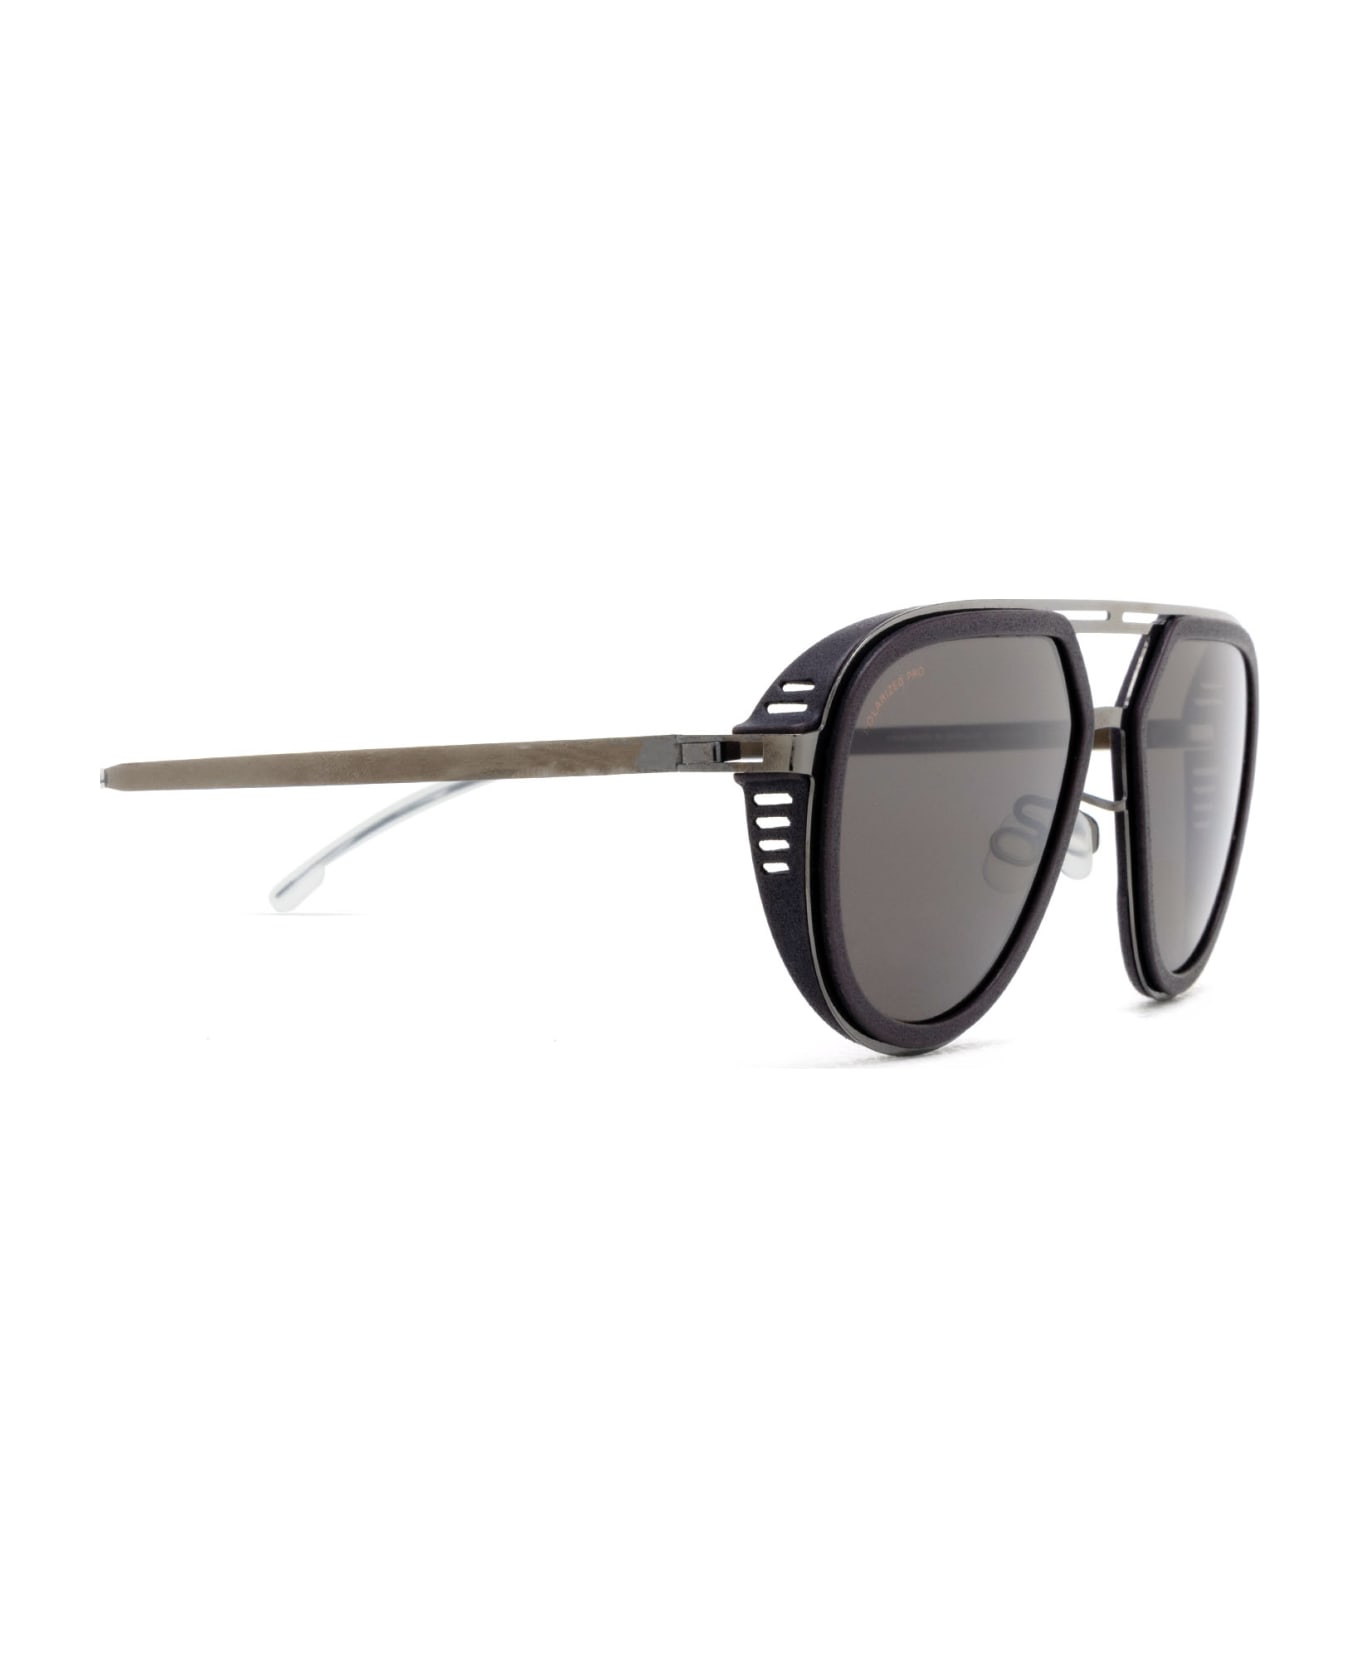 Mykita Cypress Sun Mh60-slate Grey/shiny Graphite Sunglasses - MH60-Slate Grey/Shiny Graphite